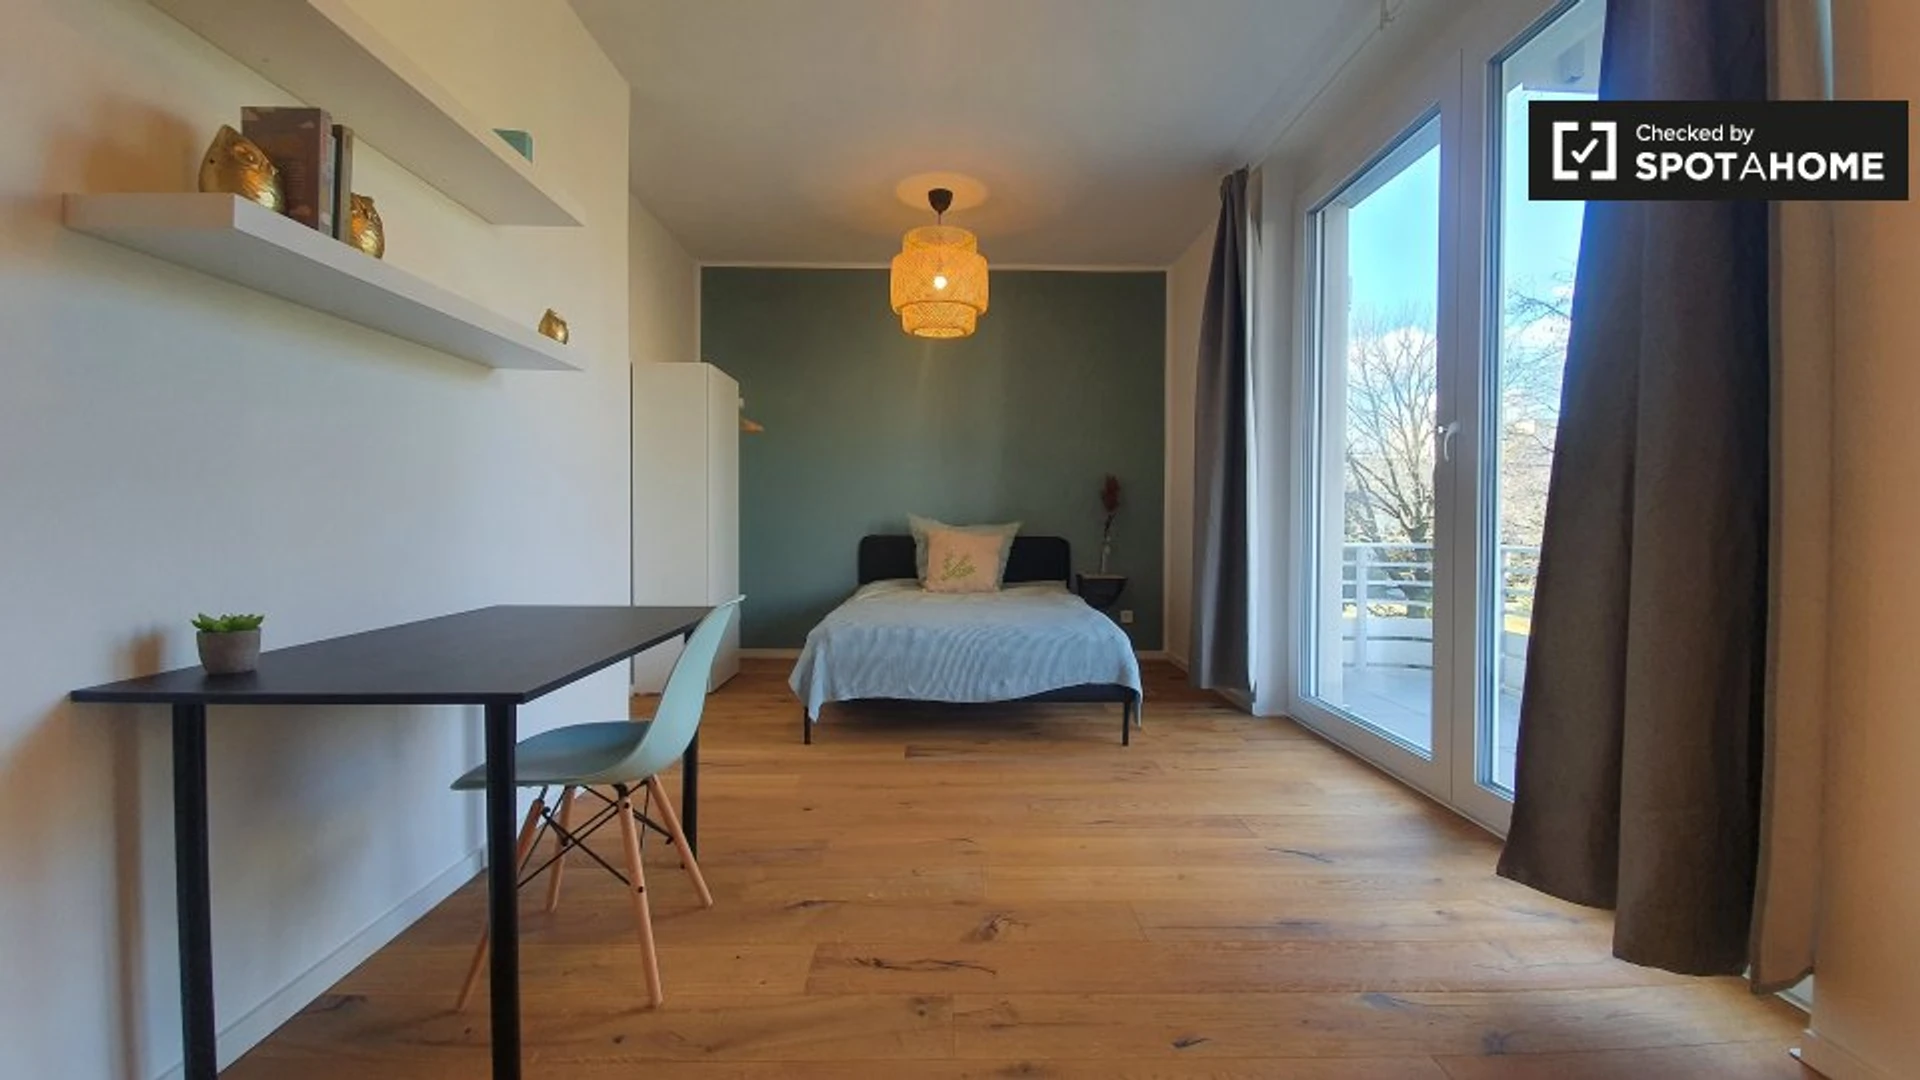 Habitación en alquiler con cama doble Berlín